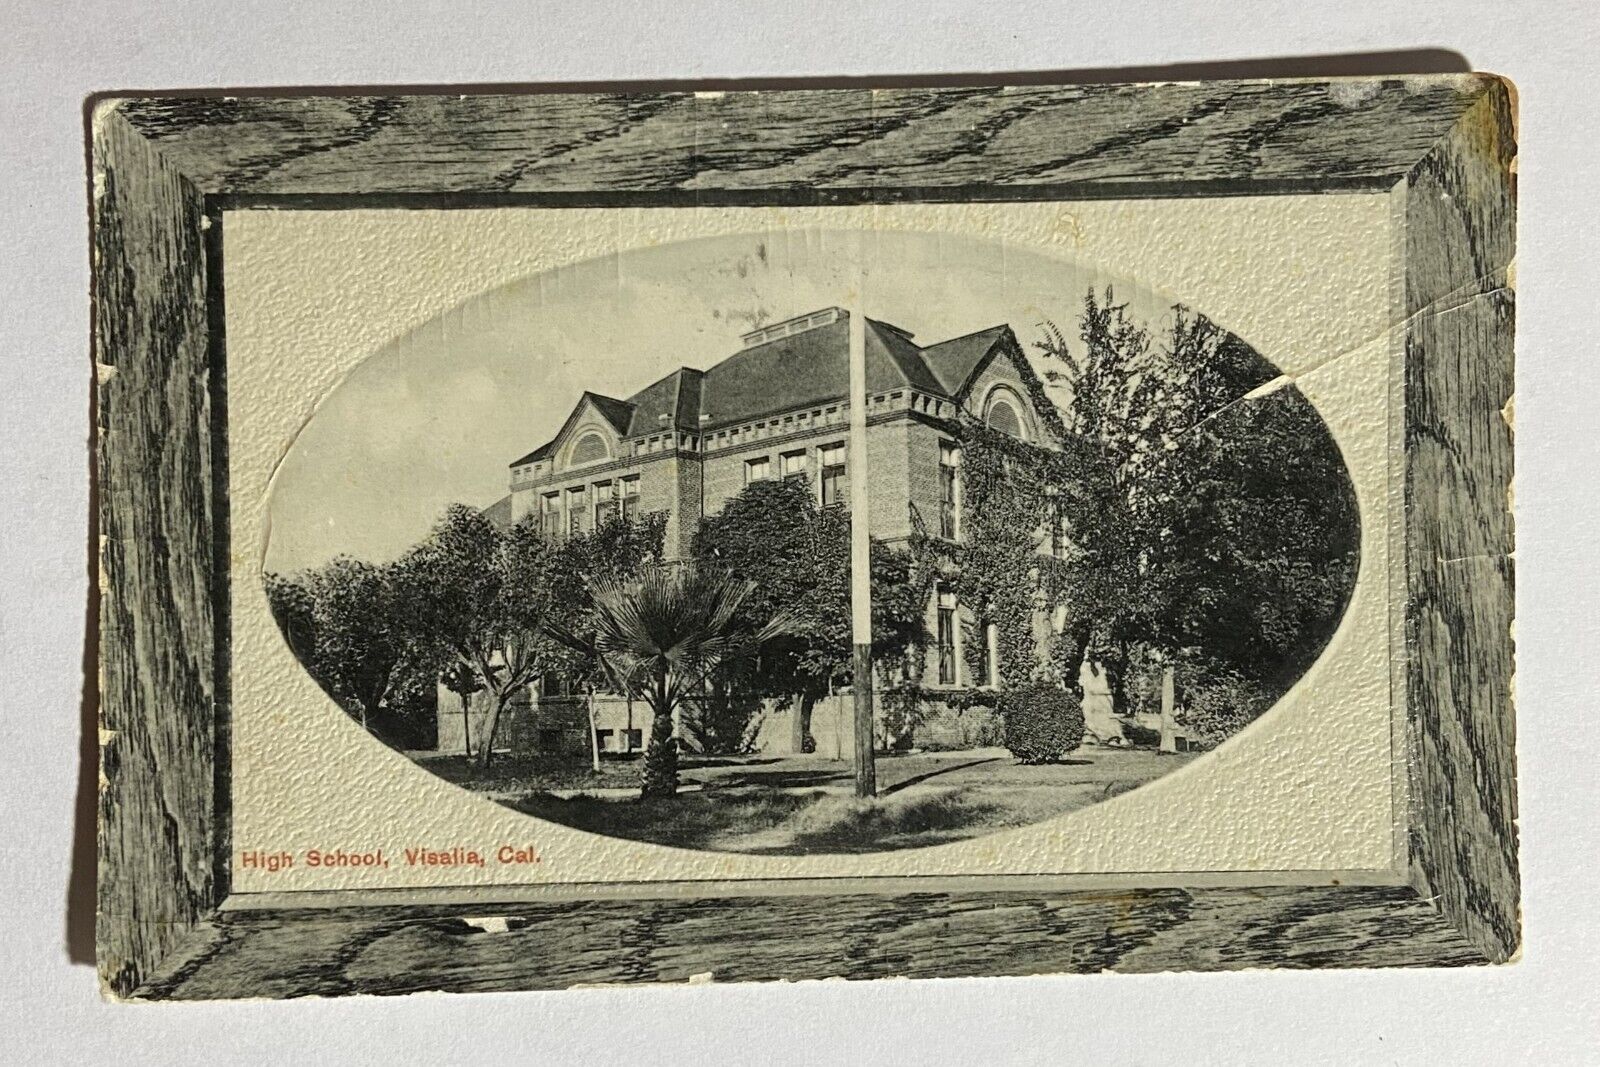 1911 Antique Real Photo RPPC Postcard High School Visalia California Photograph